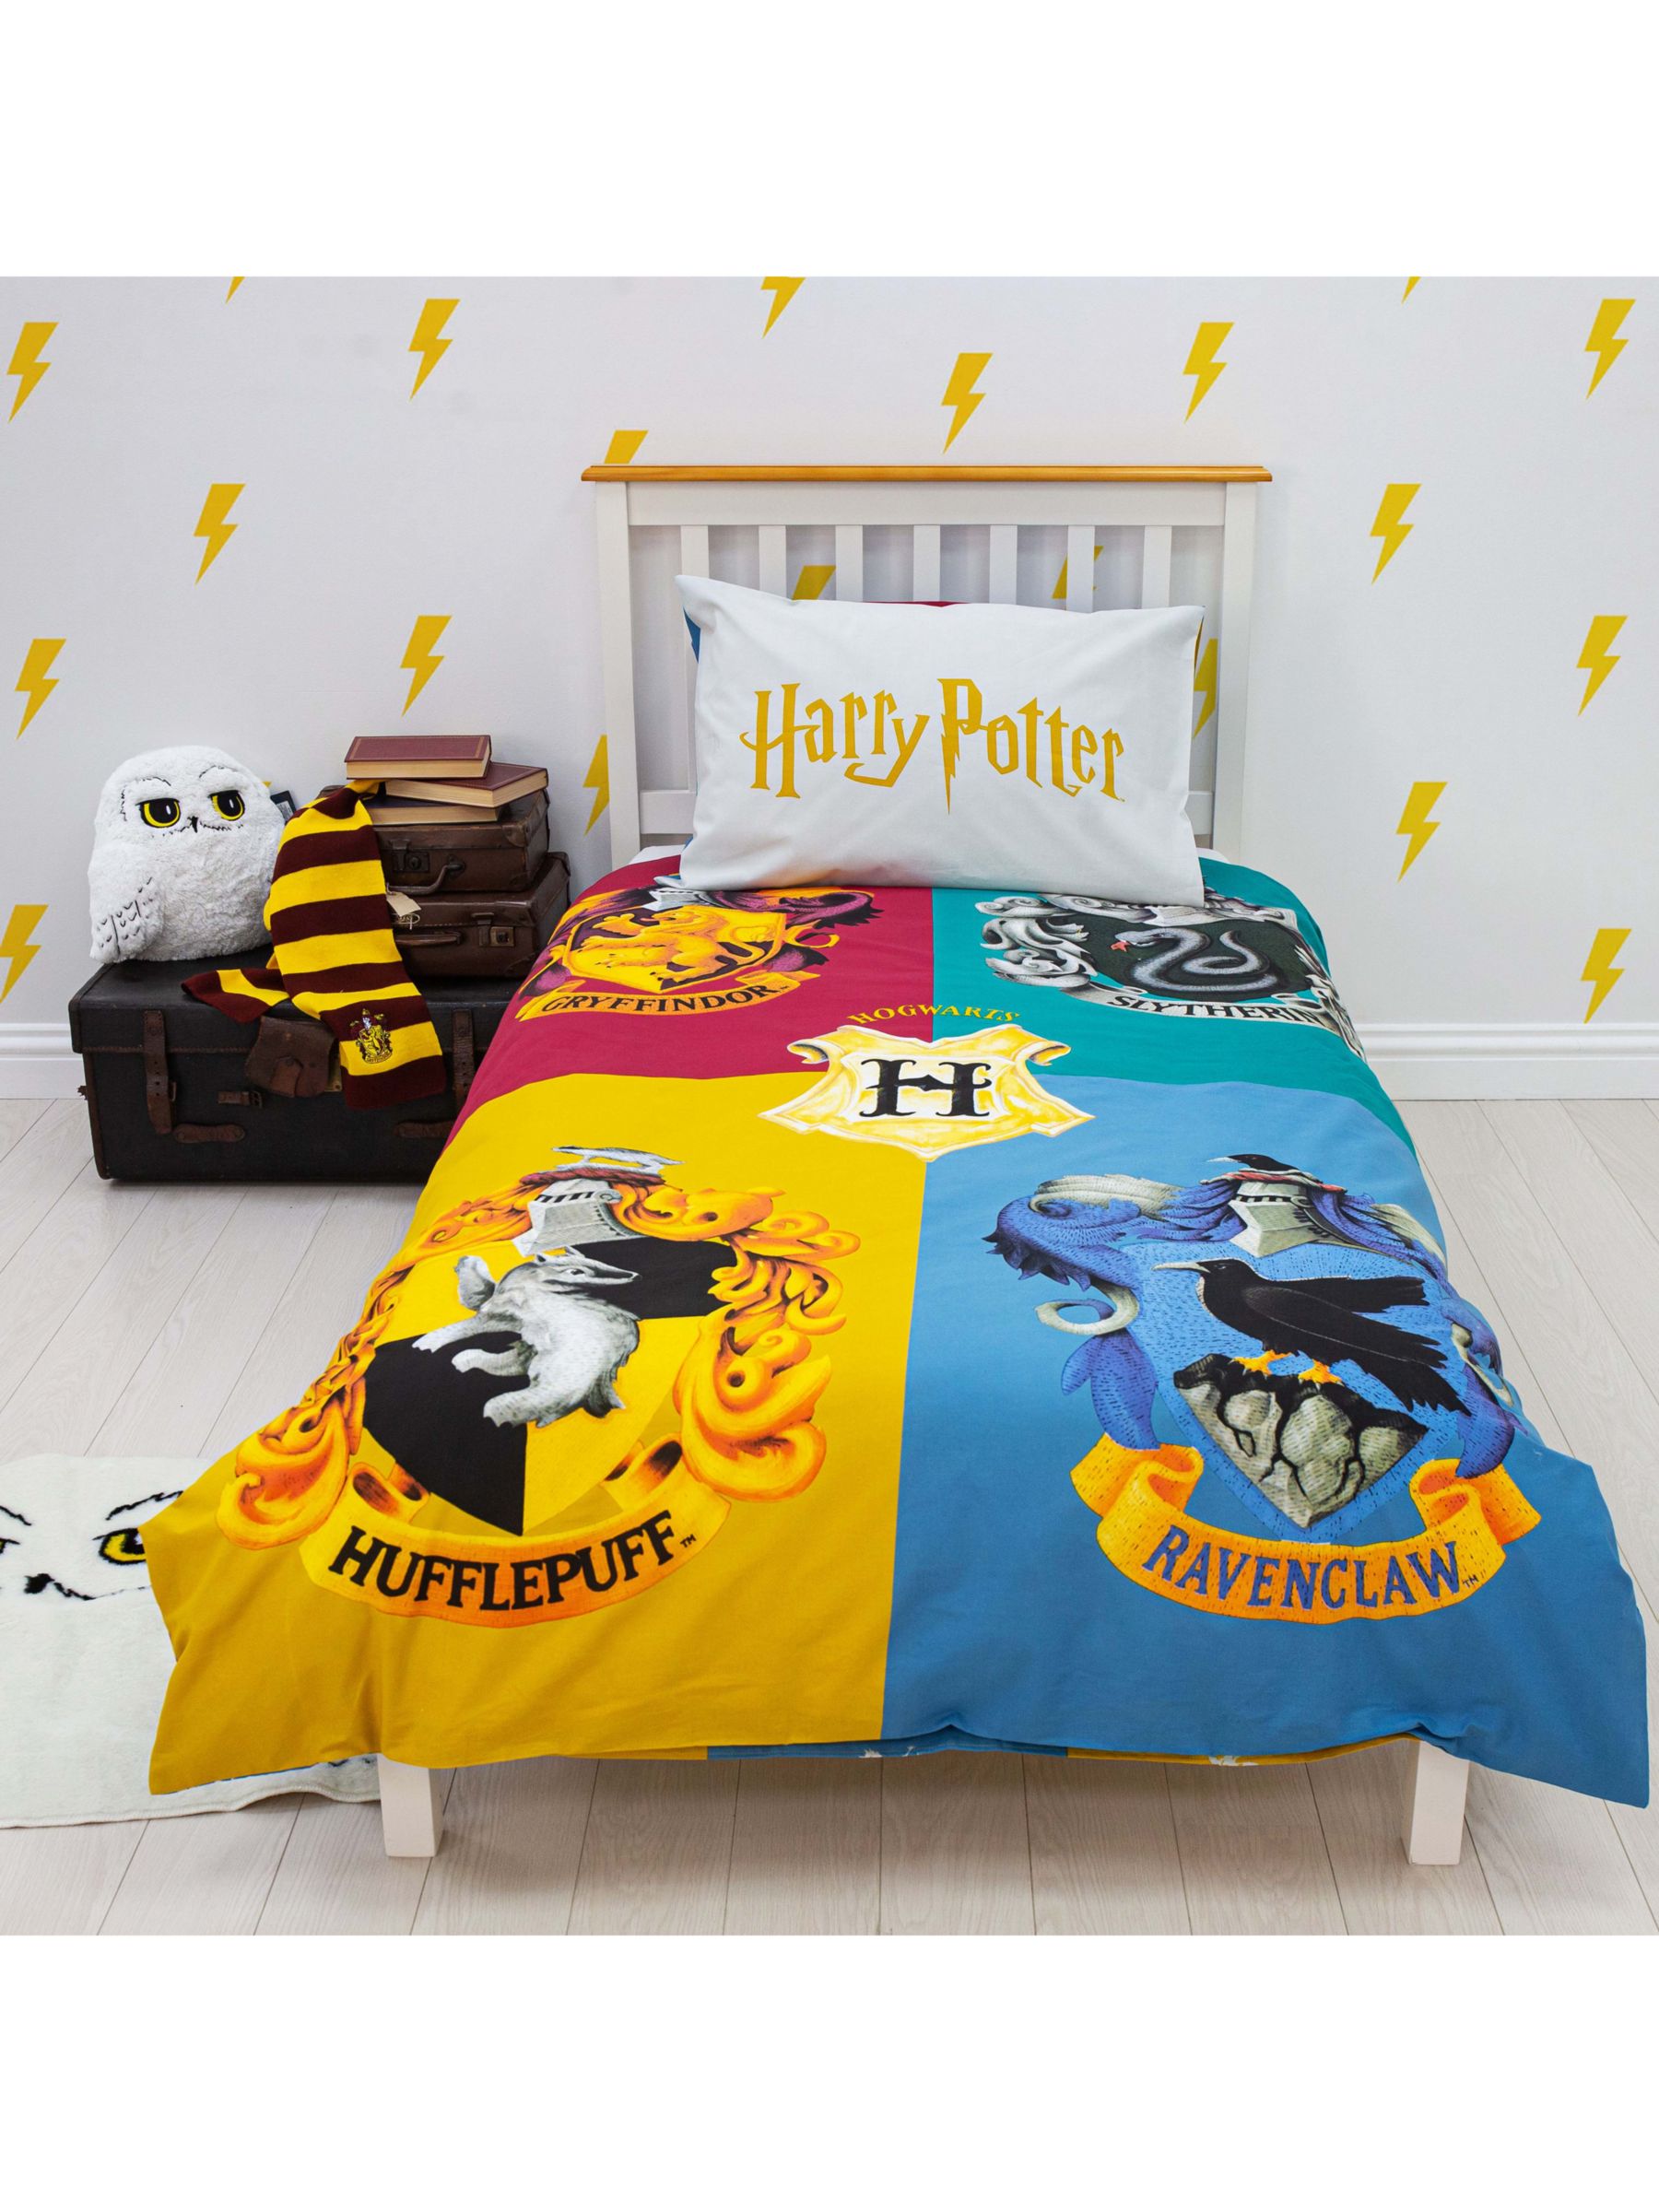 Harry Potter Topper » Sun-side-store